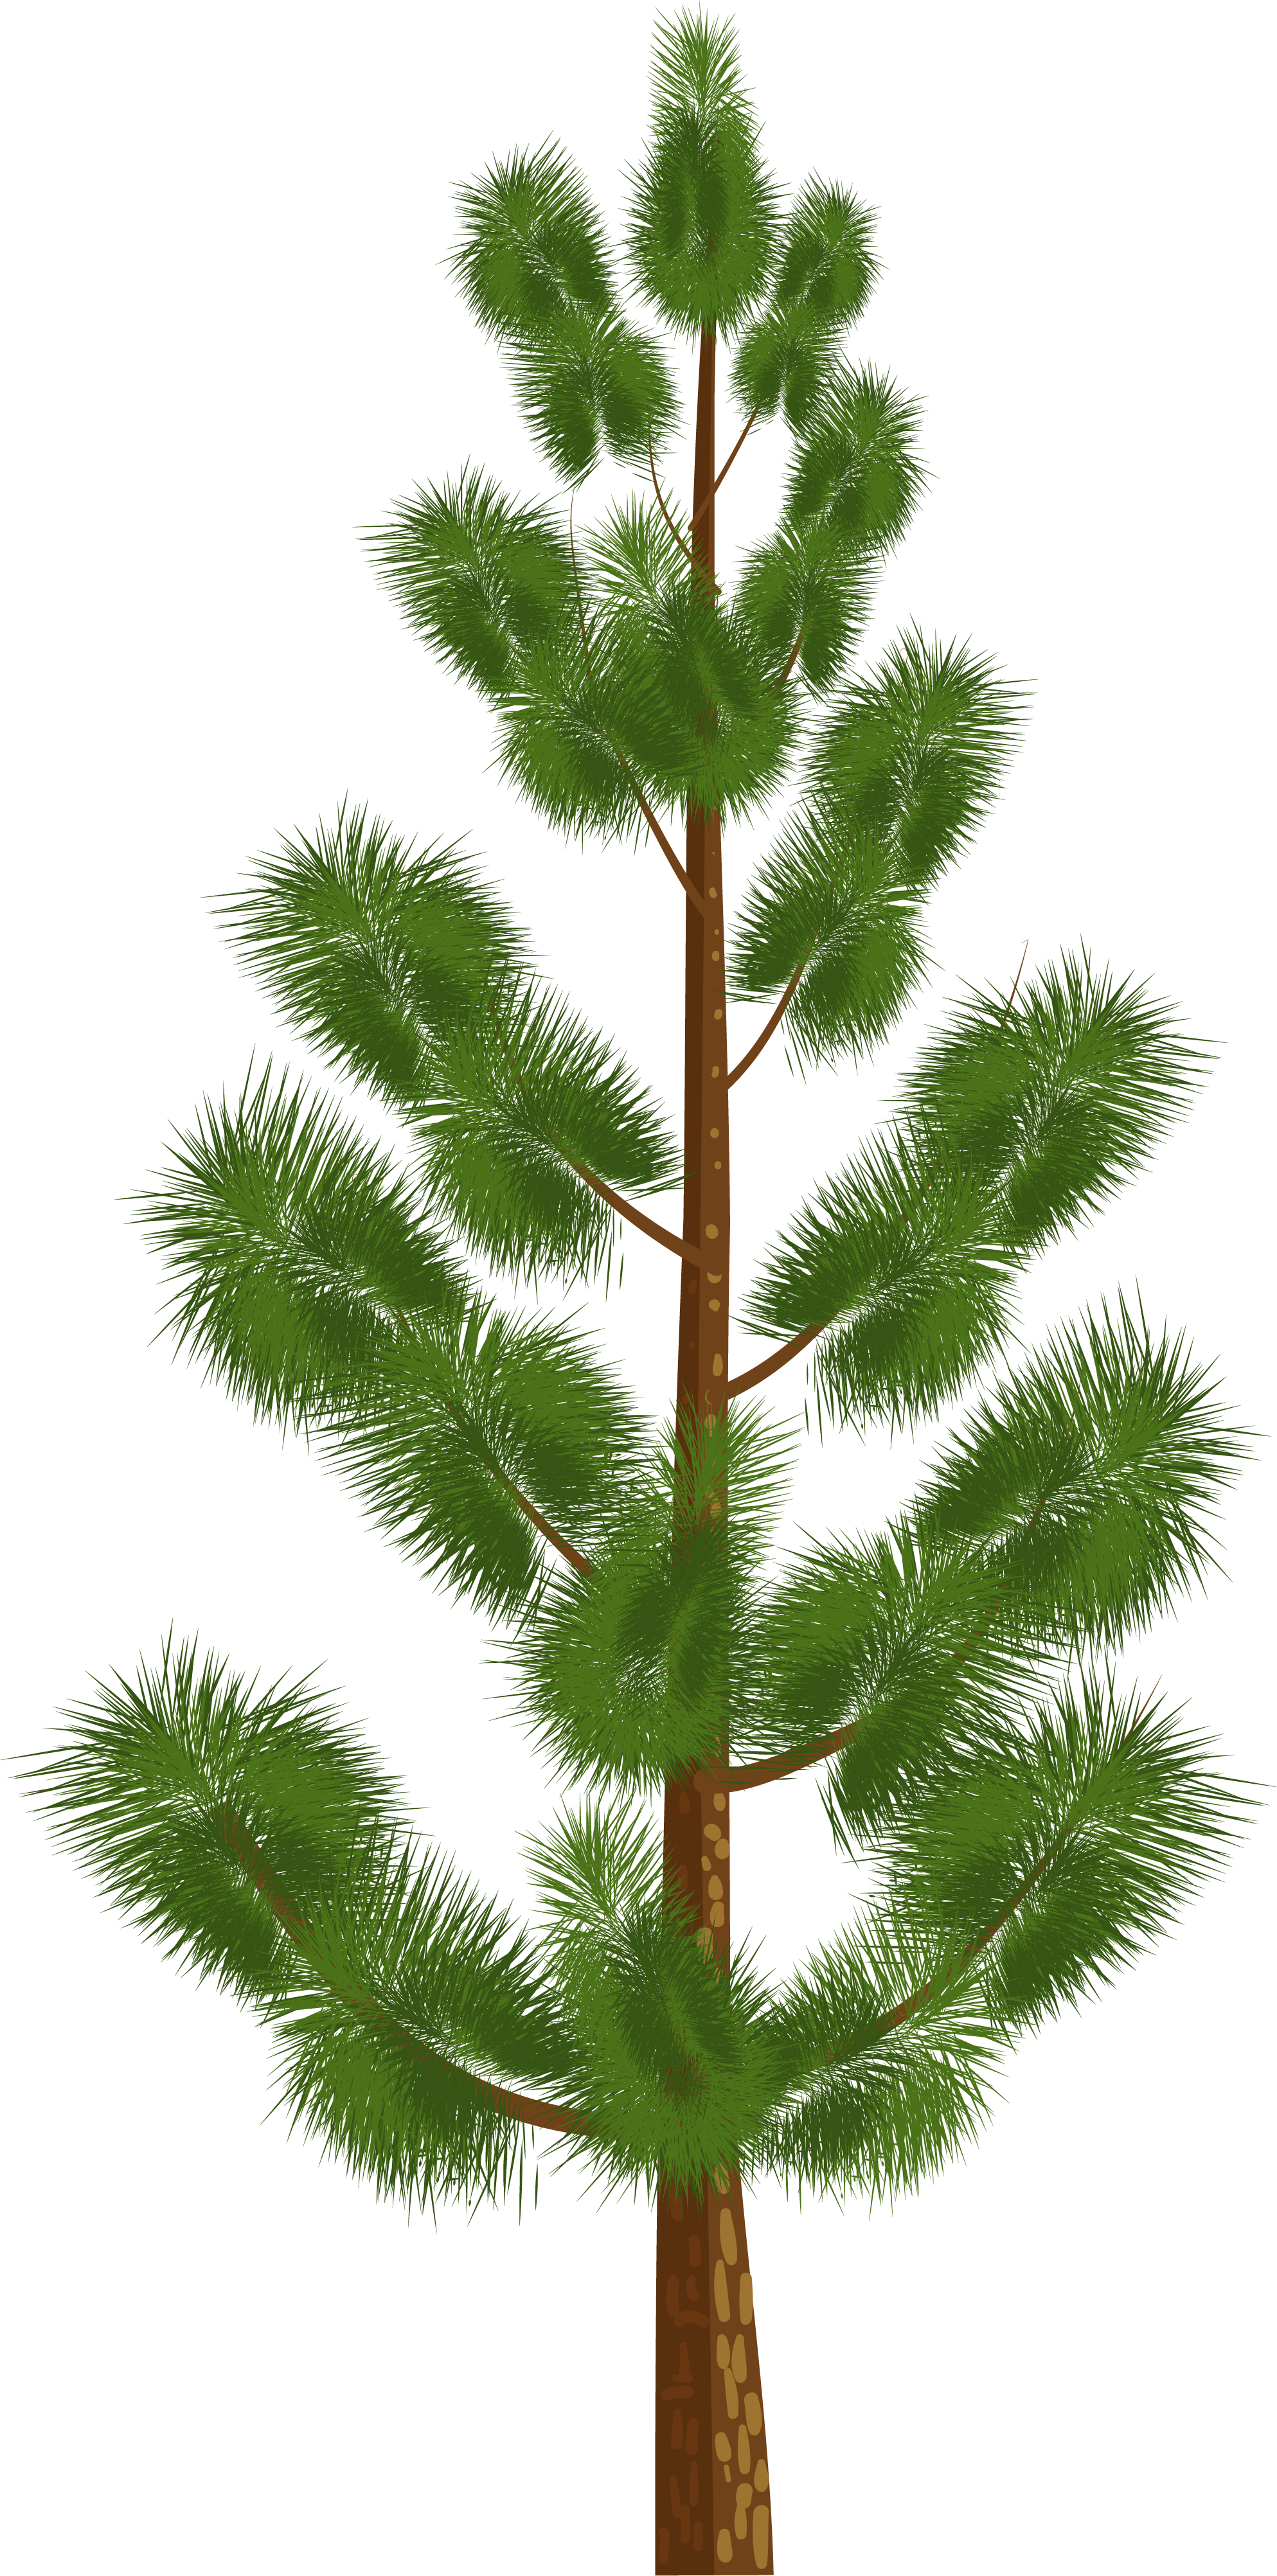 Illustration of a pine tree